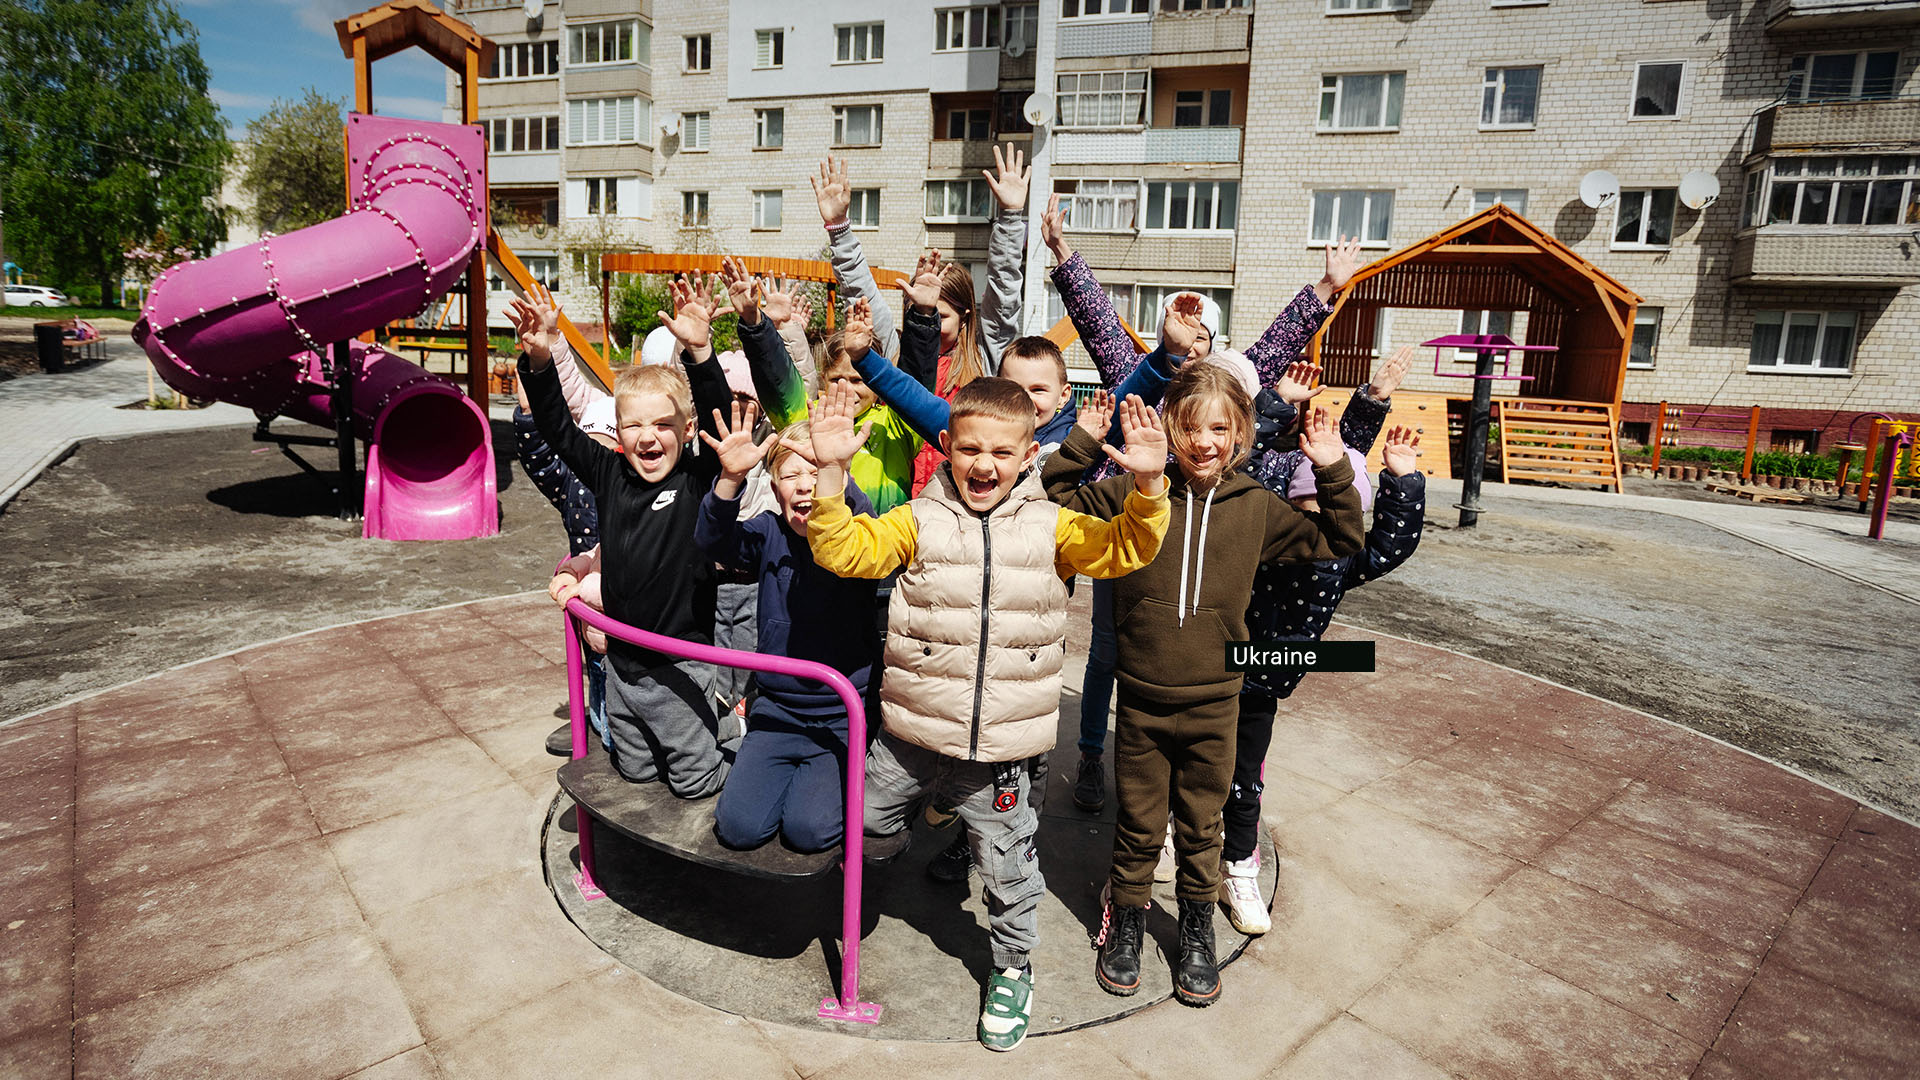 Ukrainian children in a playground playing.